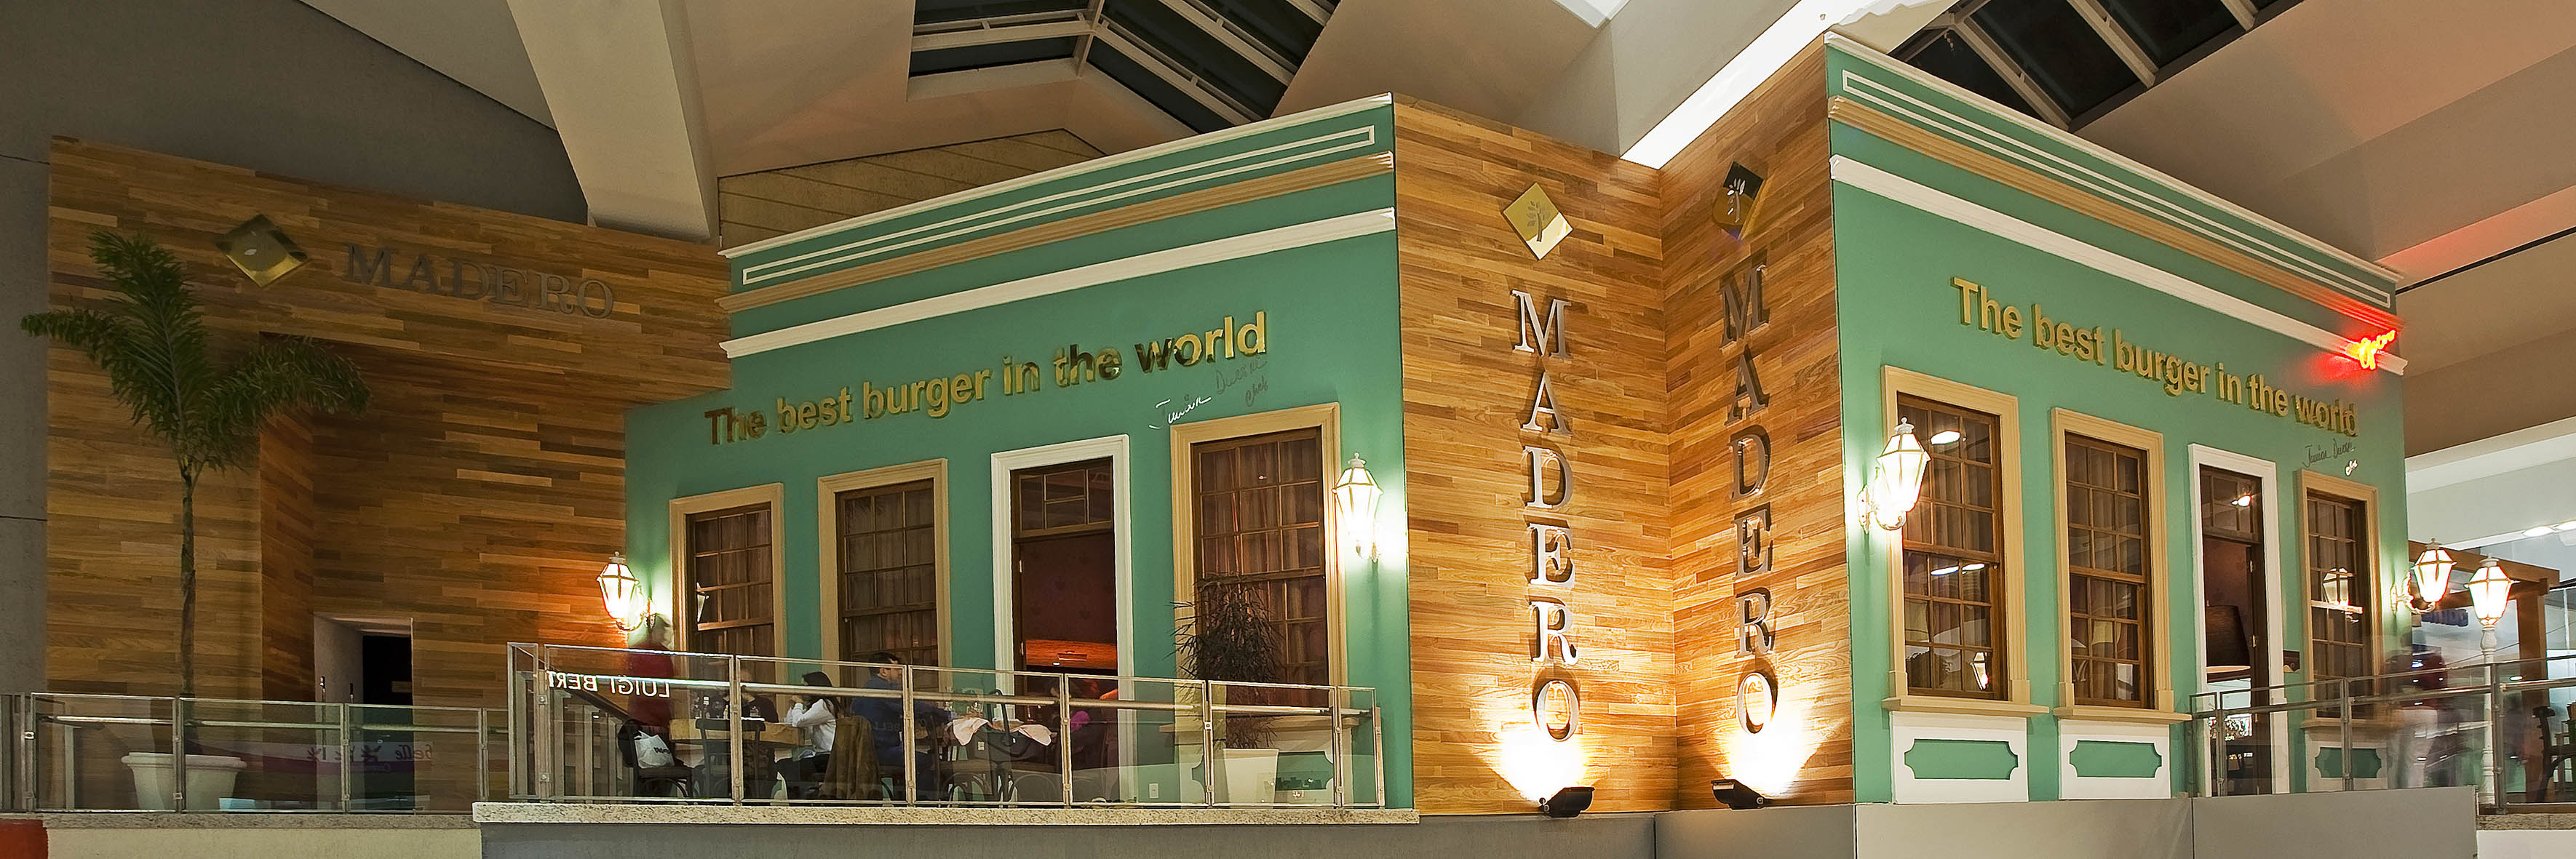 Restaurante Madero